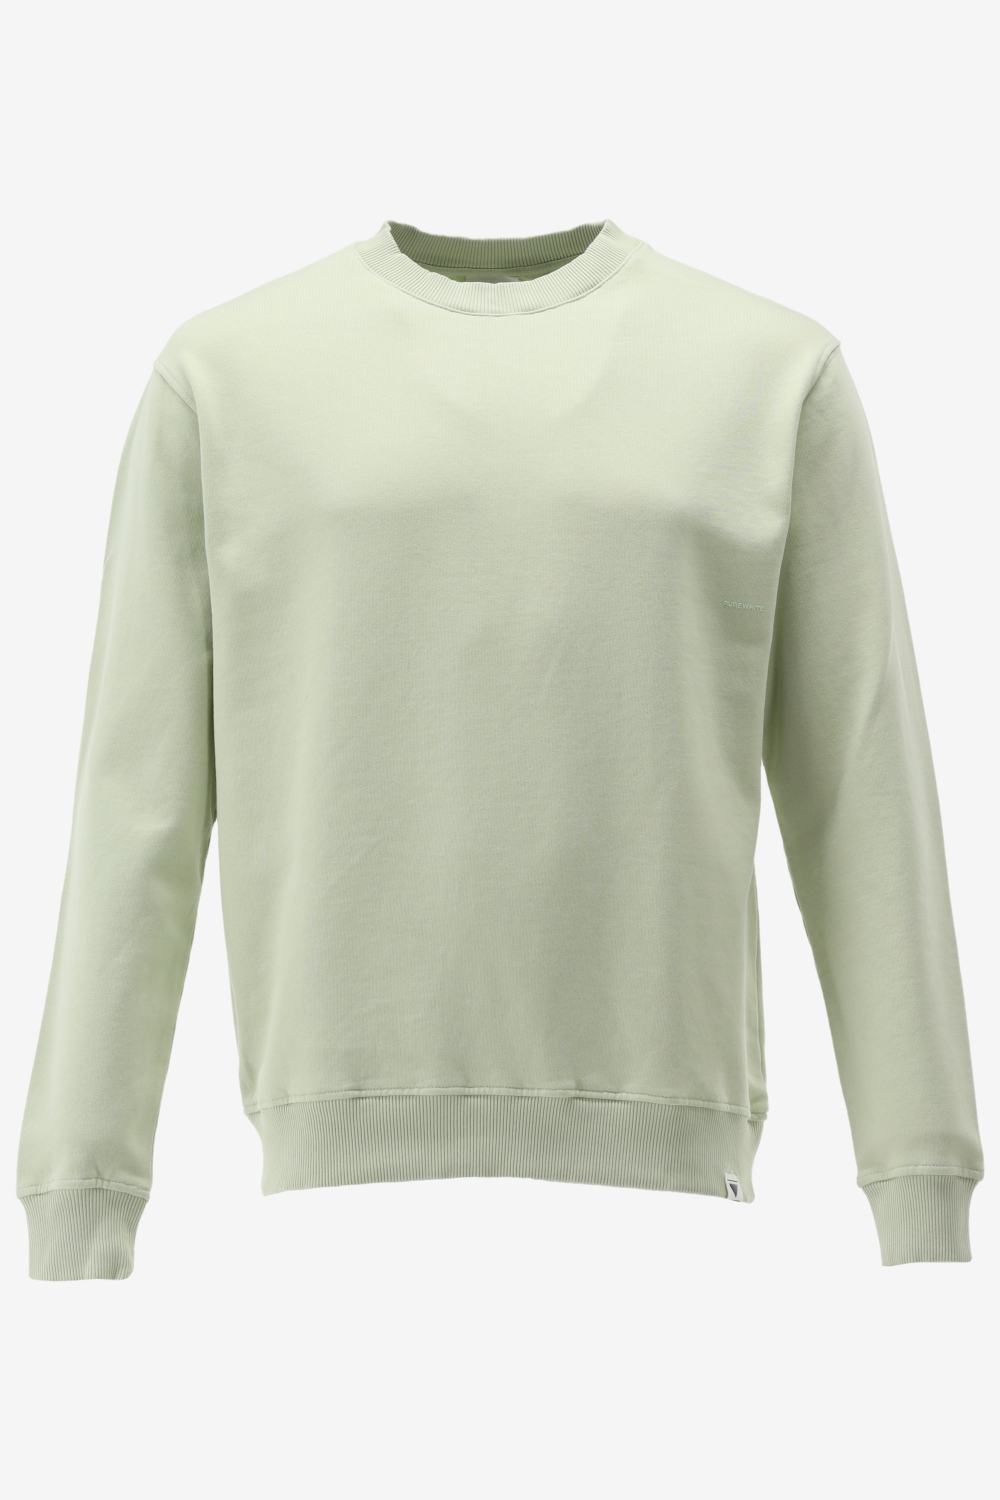 Purewhite - Heren Regular Fit Sweater - Groen - Maat L